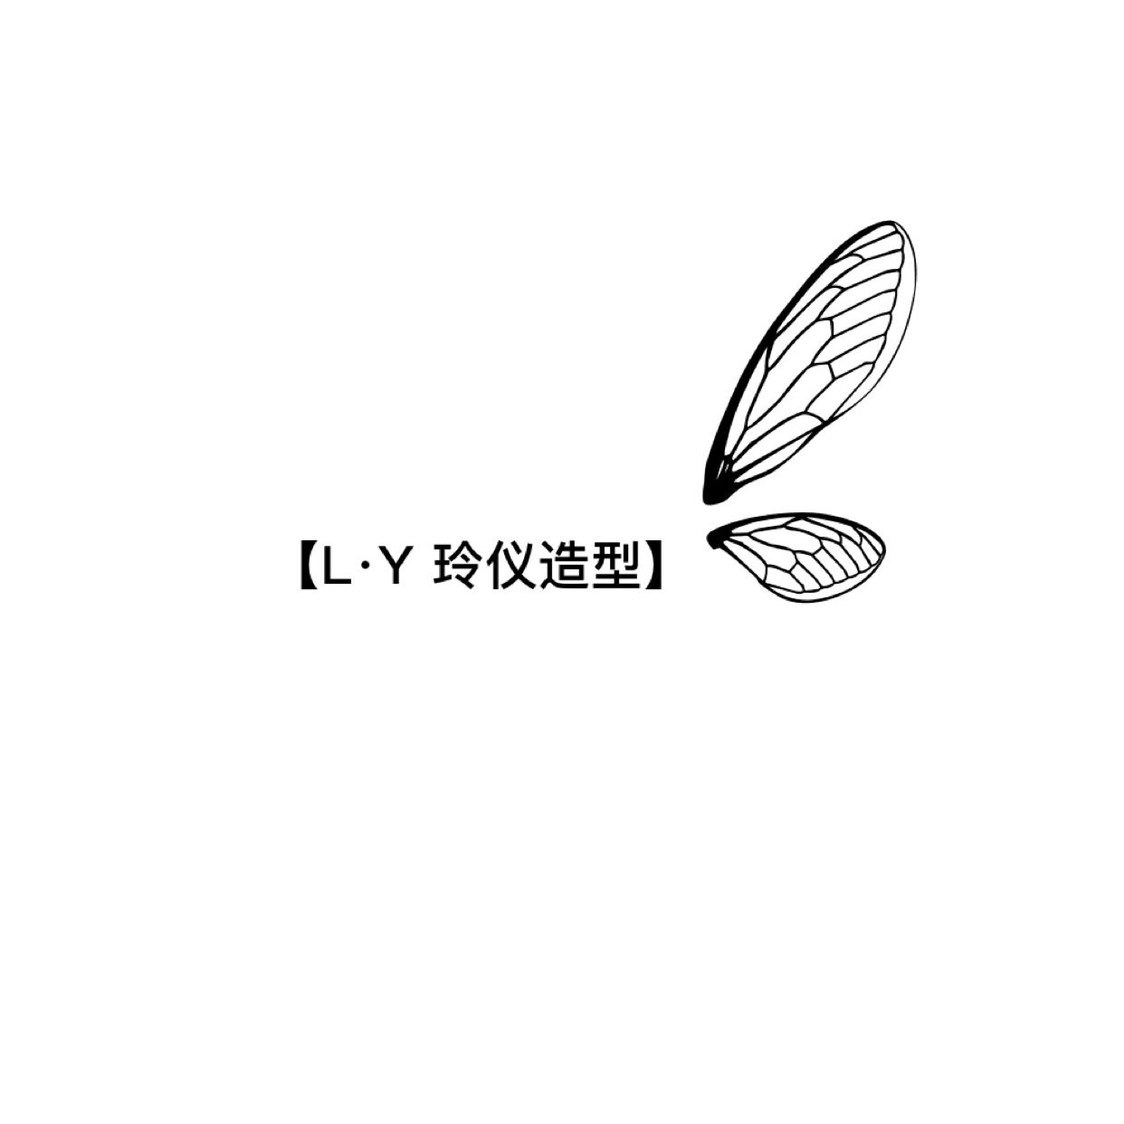 L.Y玲仪造型